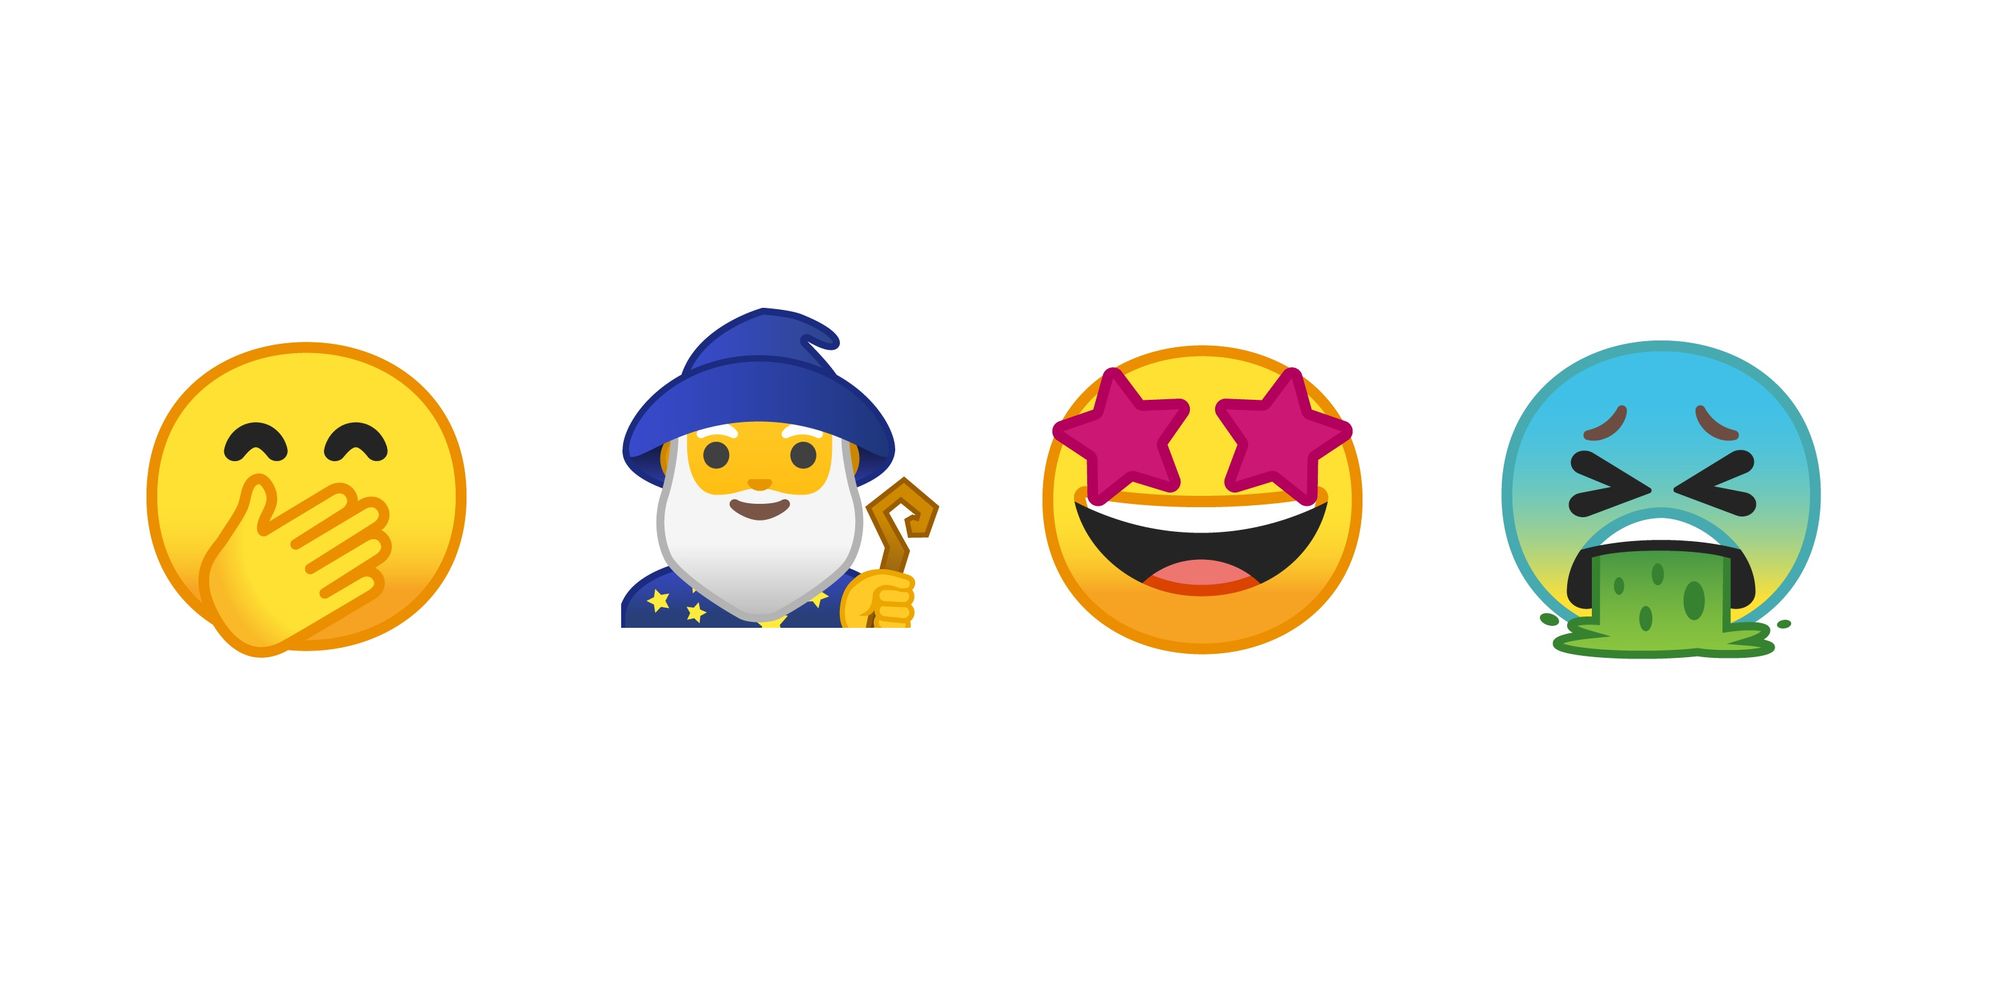 RIP Blobs: Google Redesigns Emojis